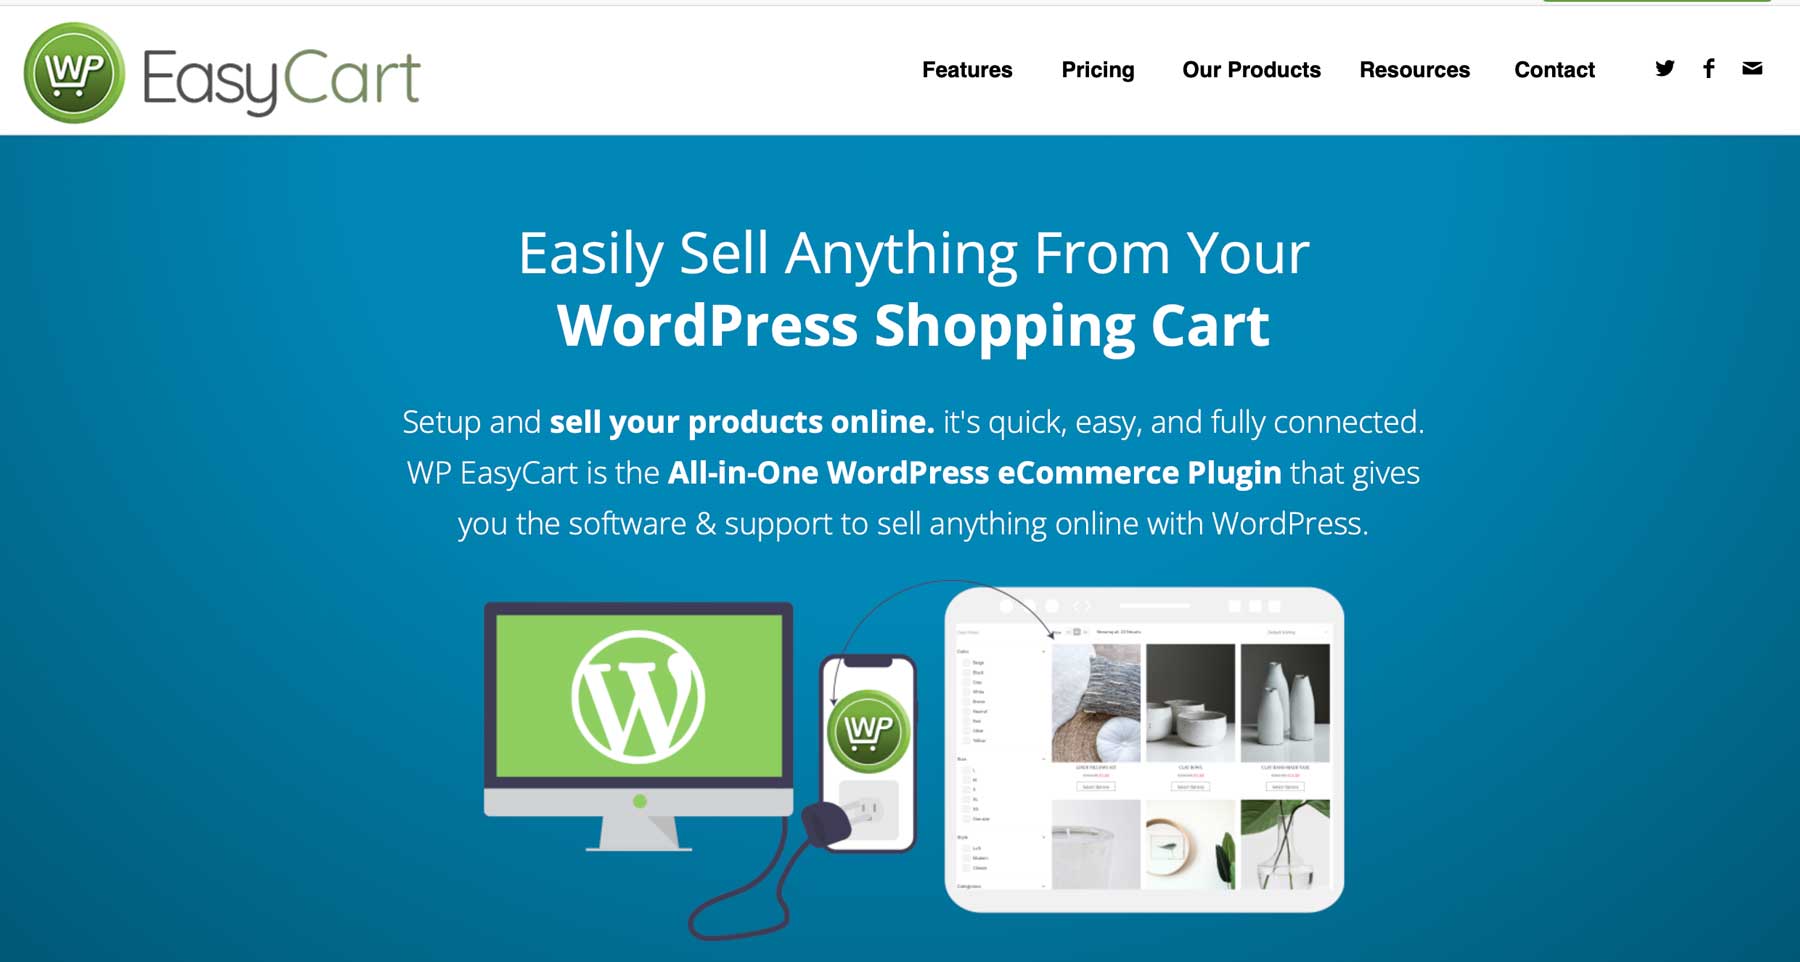 WP Easy Cart best WordPress ecommerce cart 